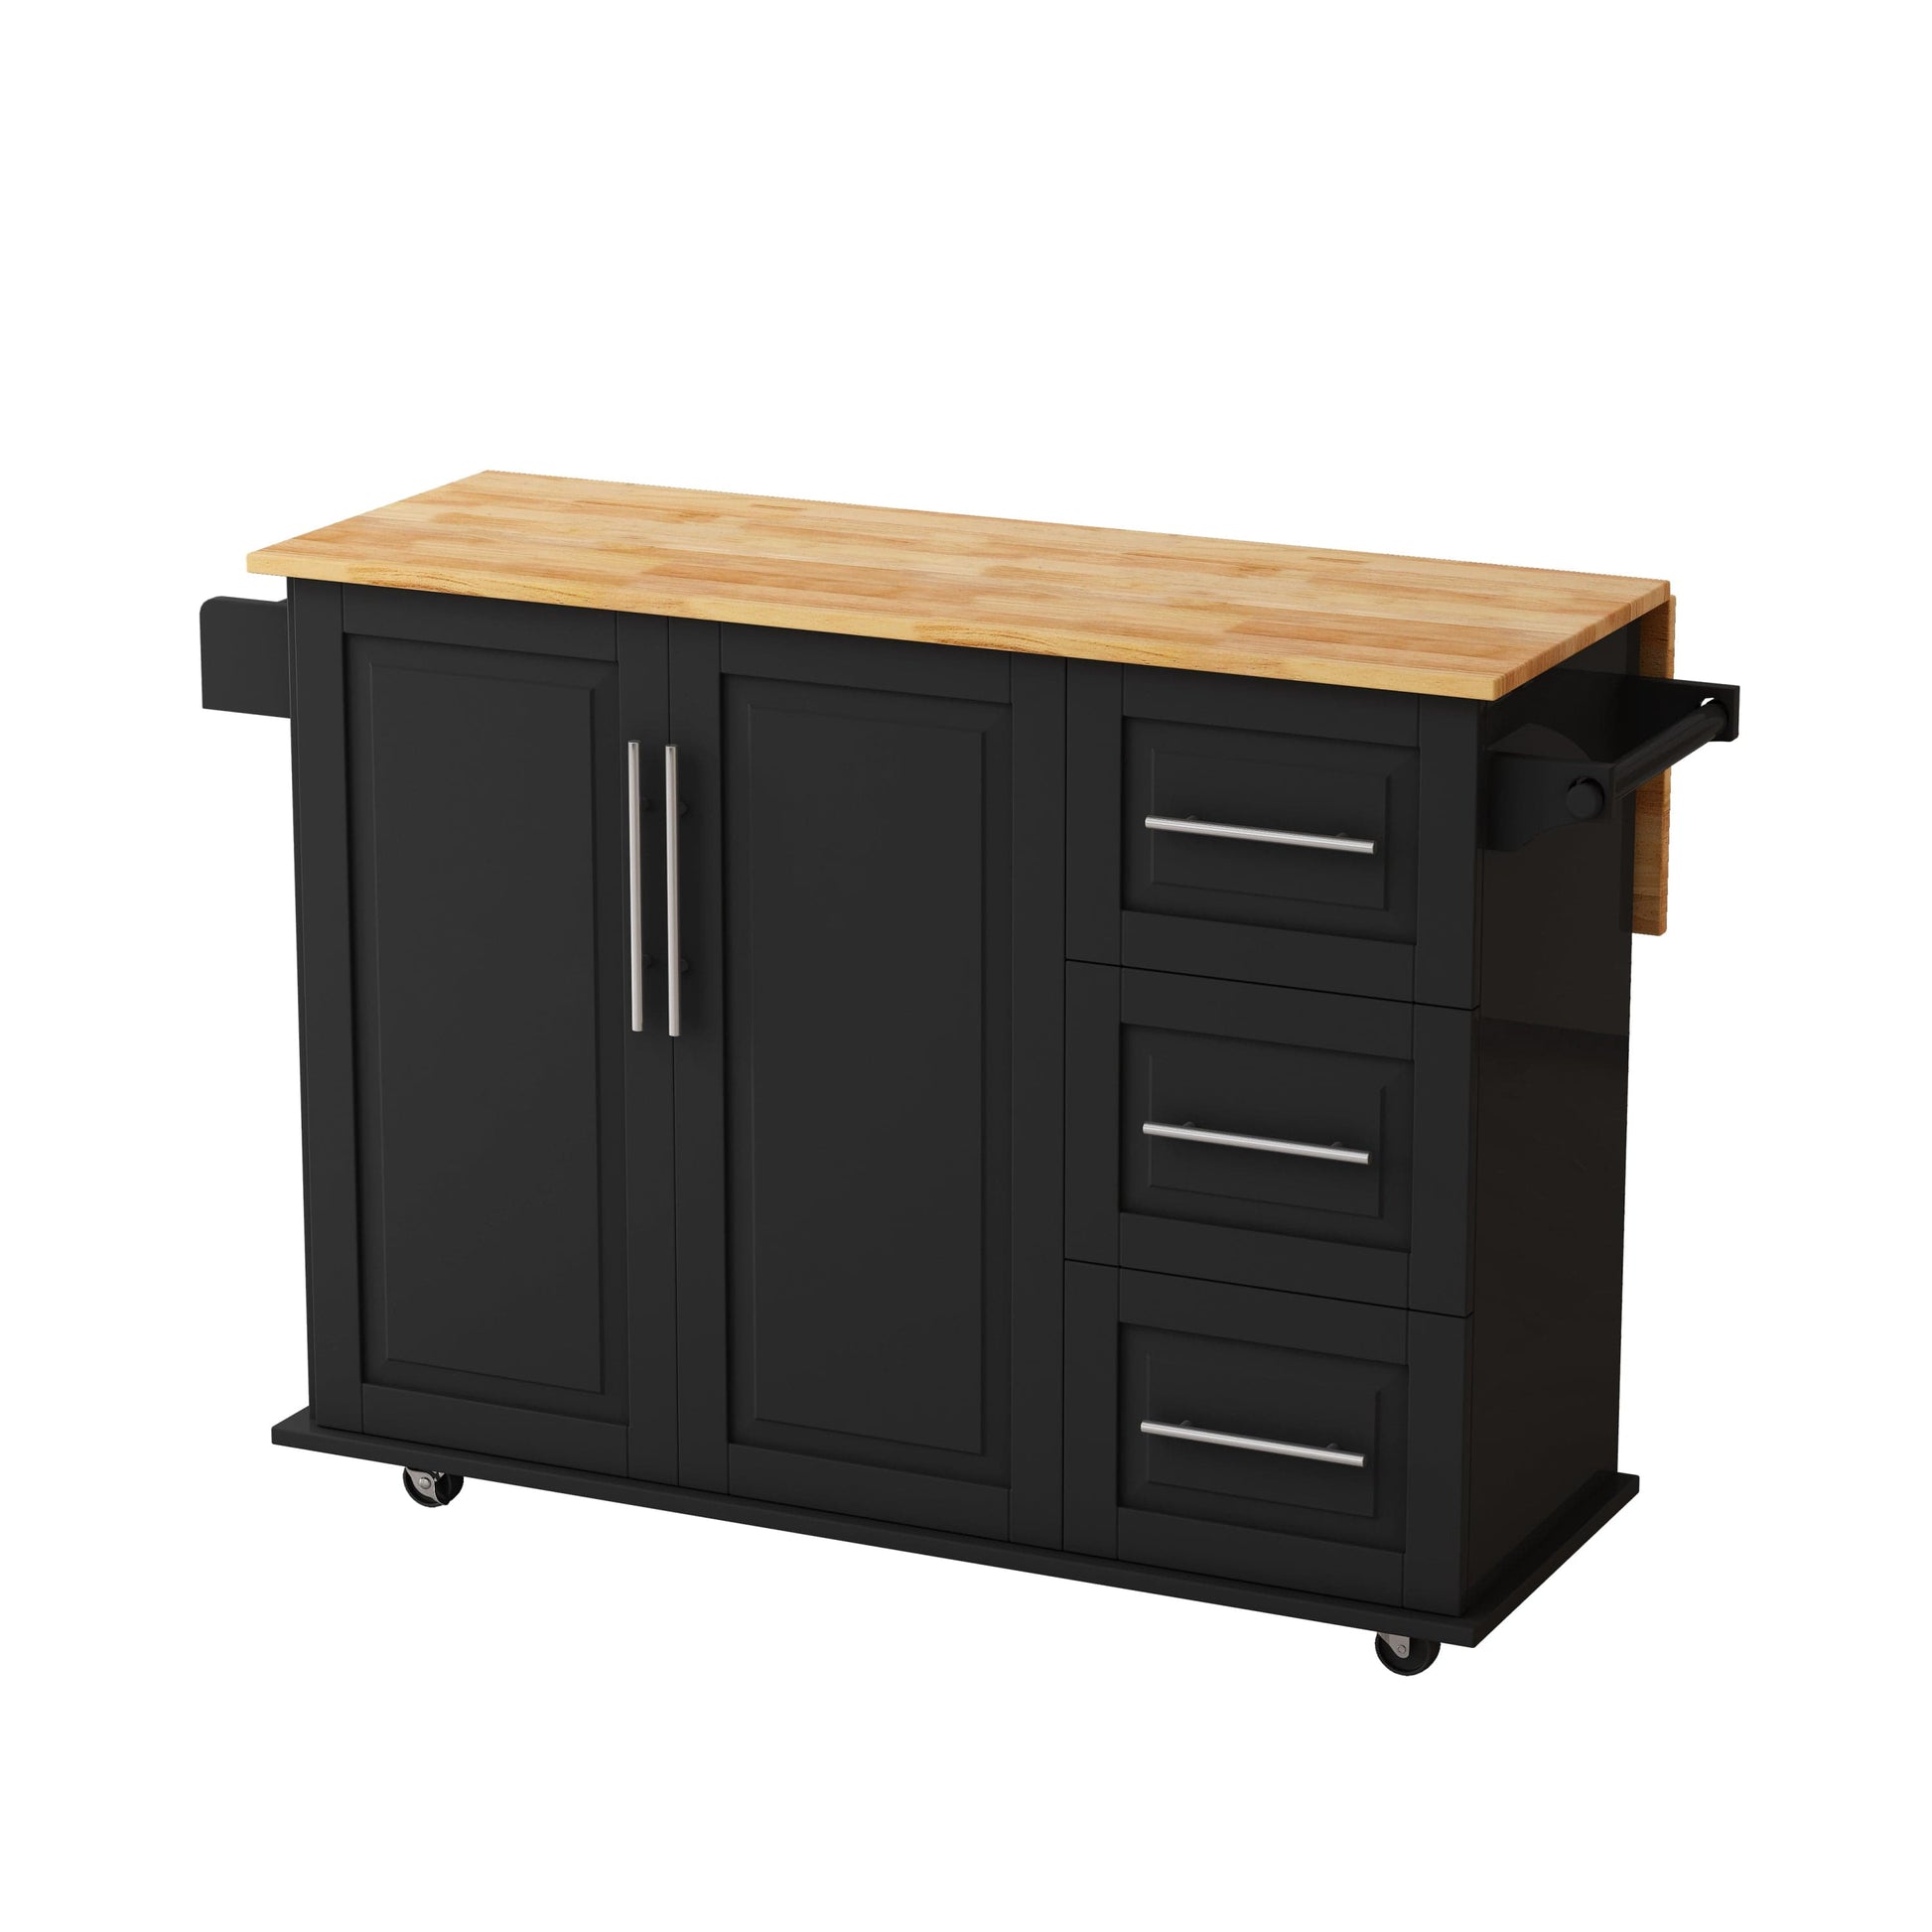 1st Choice Furniture Direct Kitchen Island 1st Choice Kitchen Island Cart with Cabinet & Drawers in Black Finish